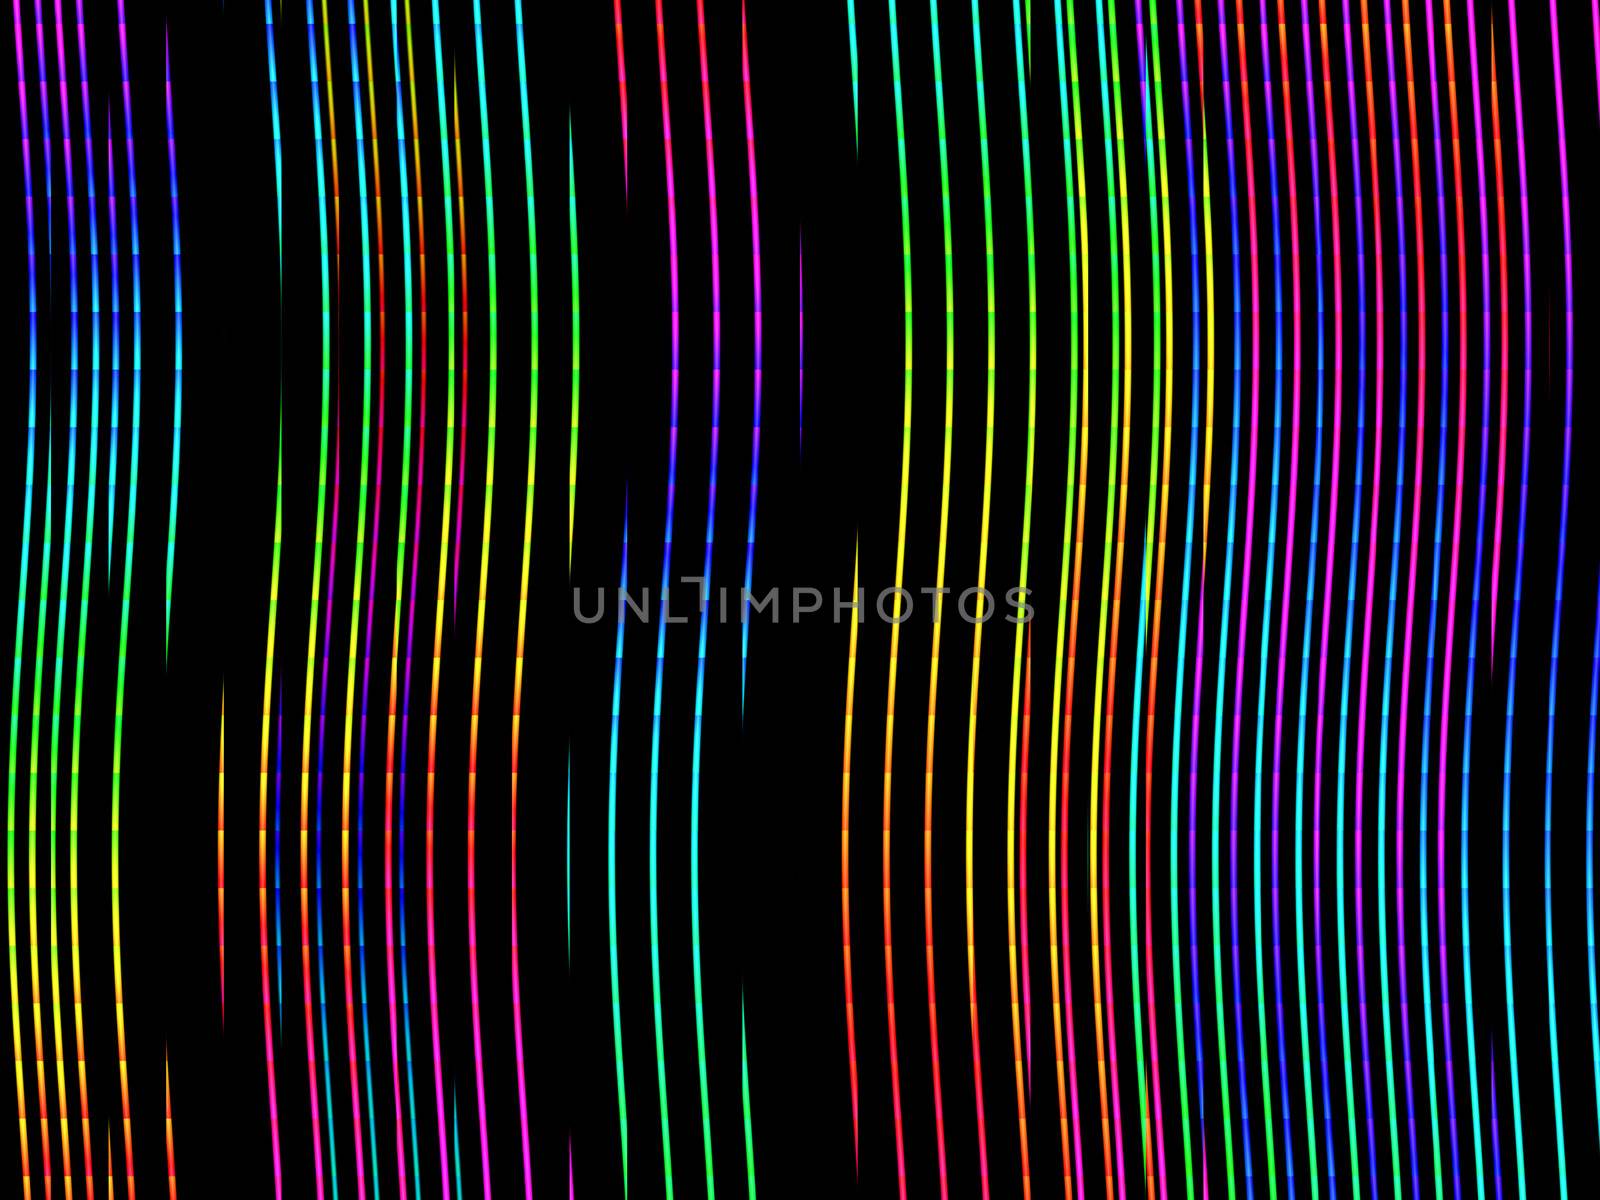 Curvy neon stripes on a black background.